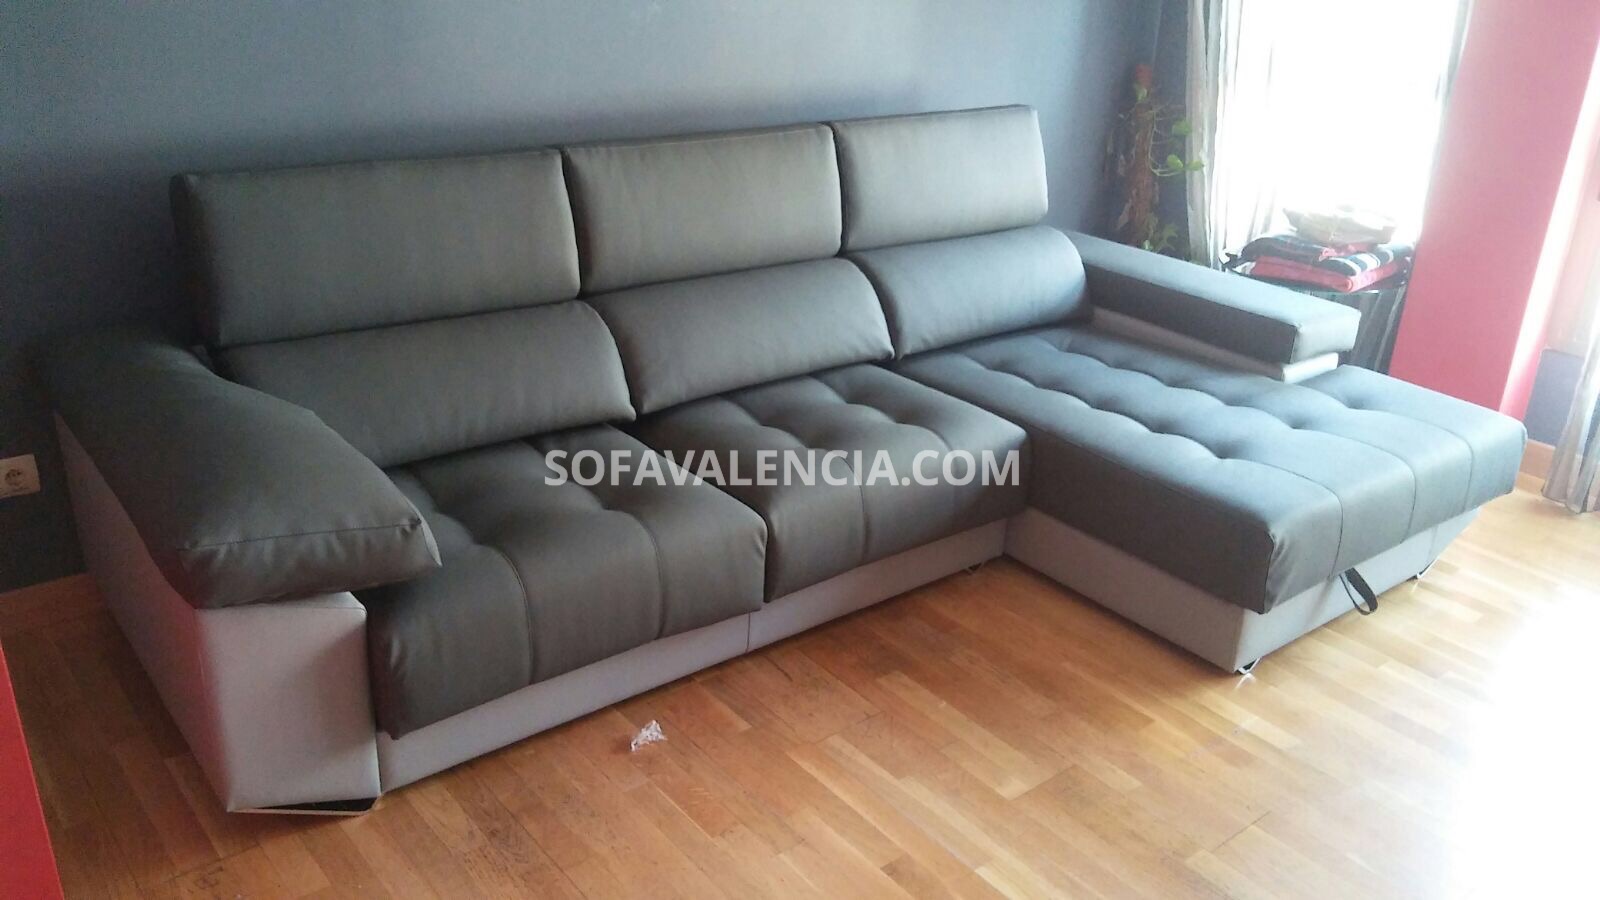 sofa-valencia-fotos-clientes-62